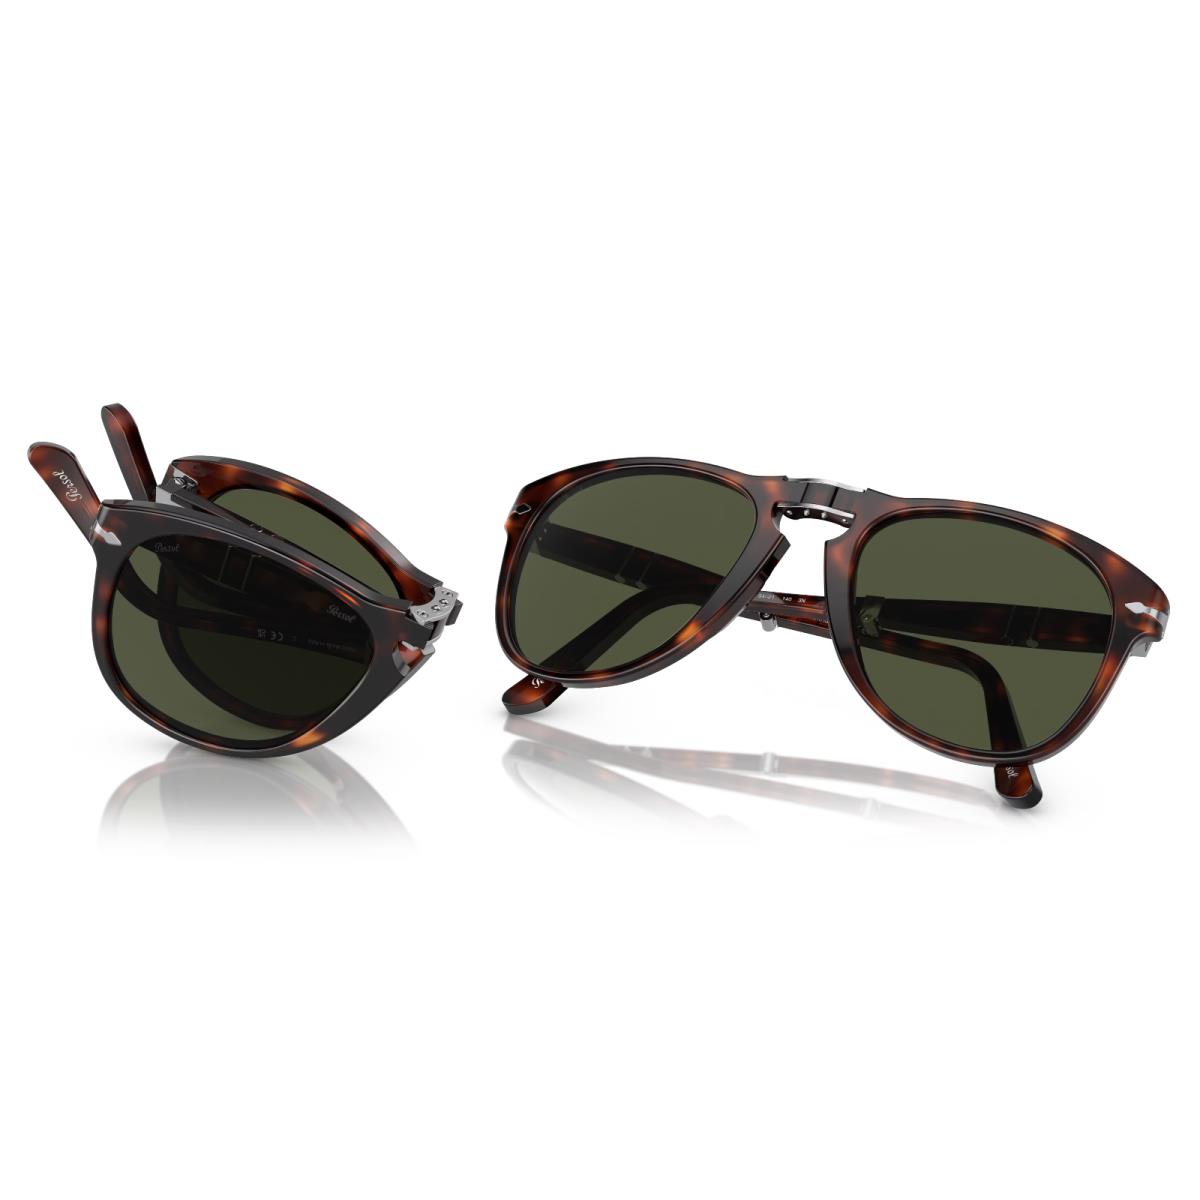 Persol Folding Sunglasses 0714 24/31 Havana w/ Green Lenses 52mm